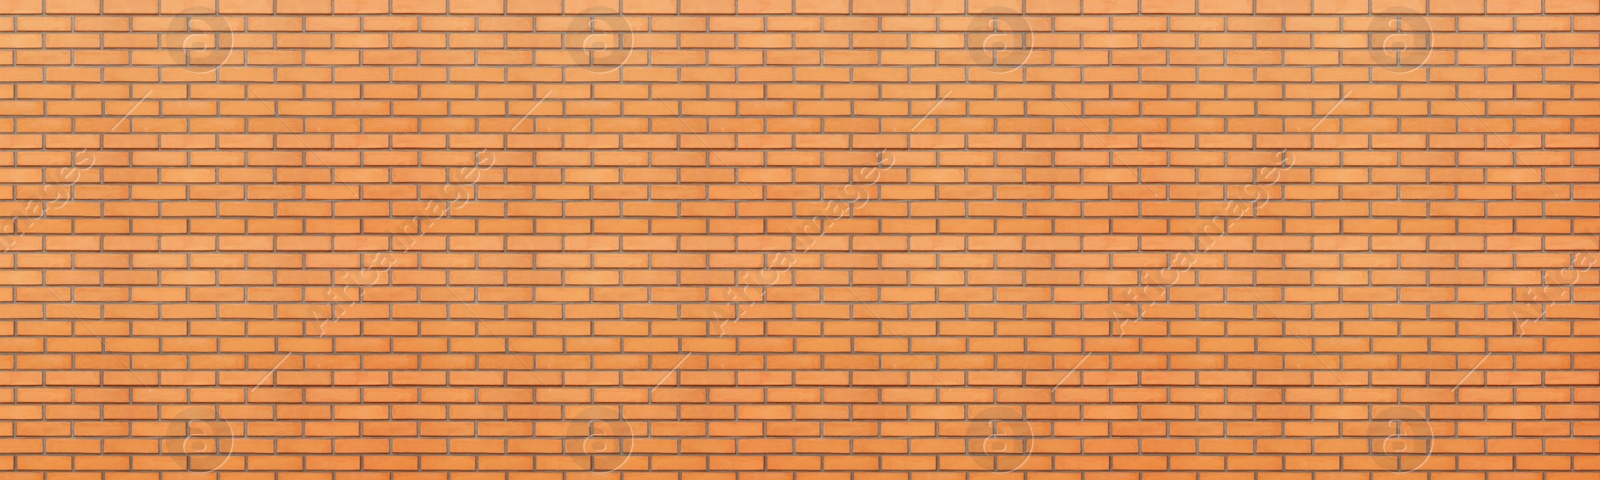 Image of Orange brick wall as background. Banner design